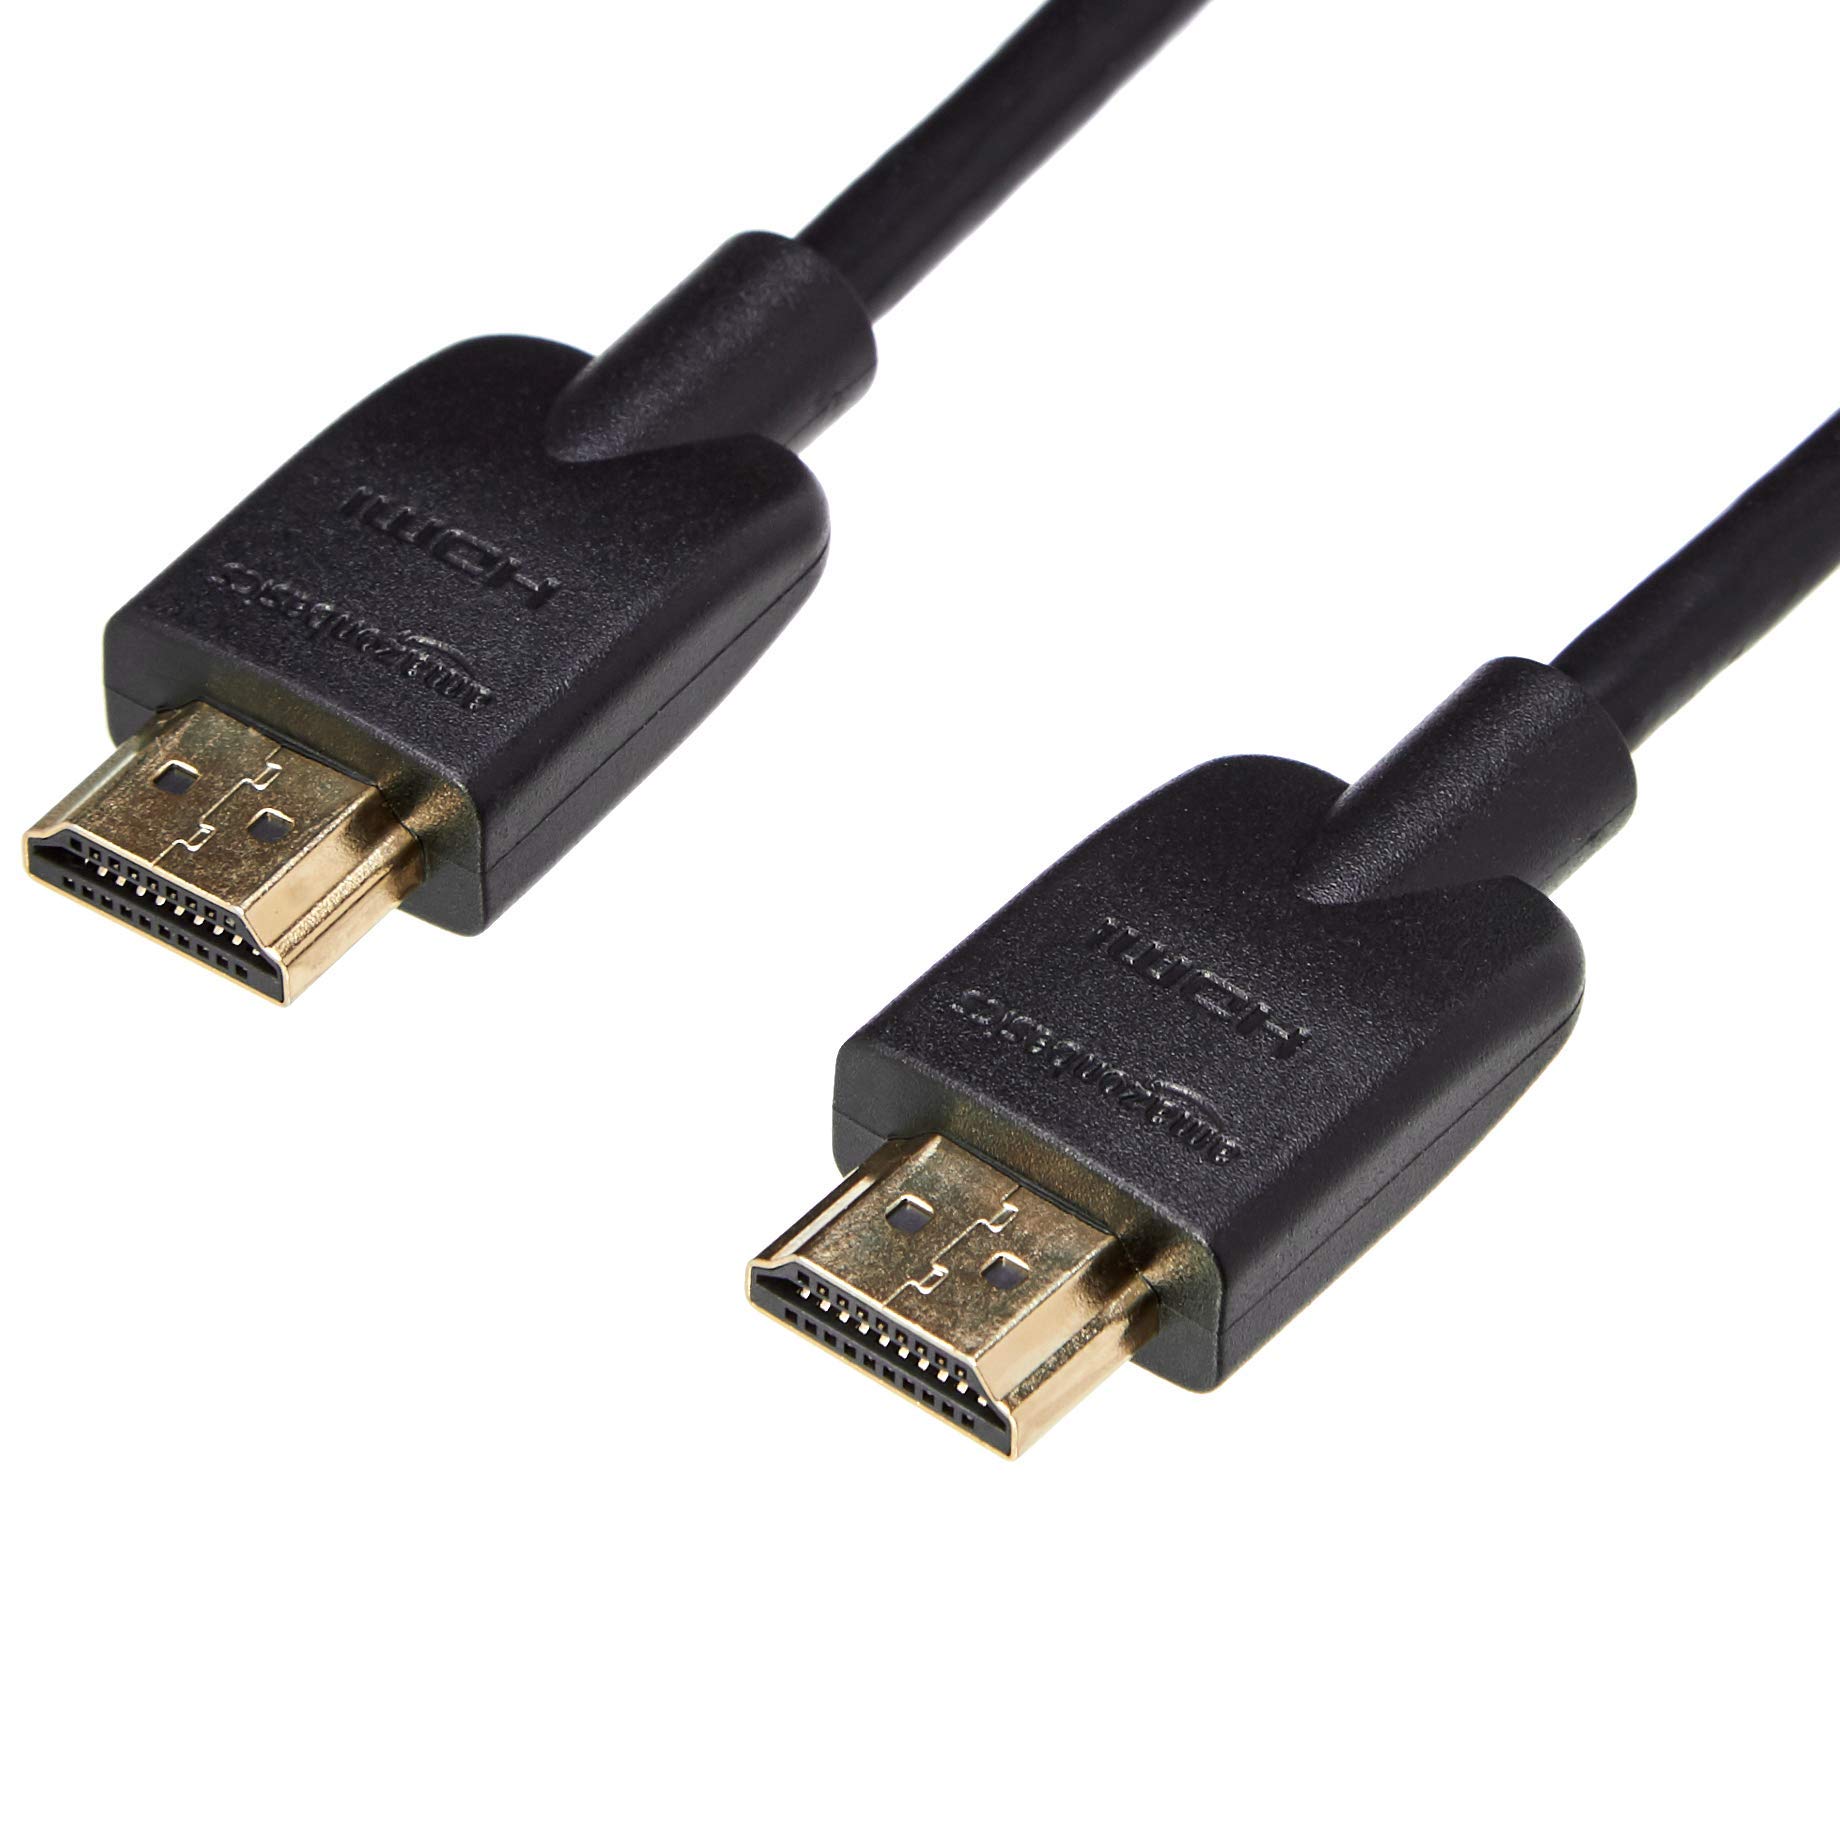 Cables and HDMI connectors